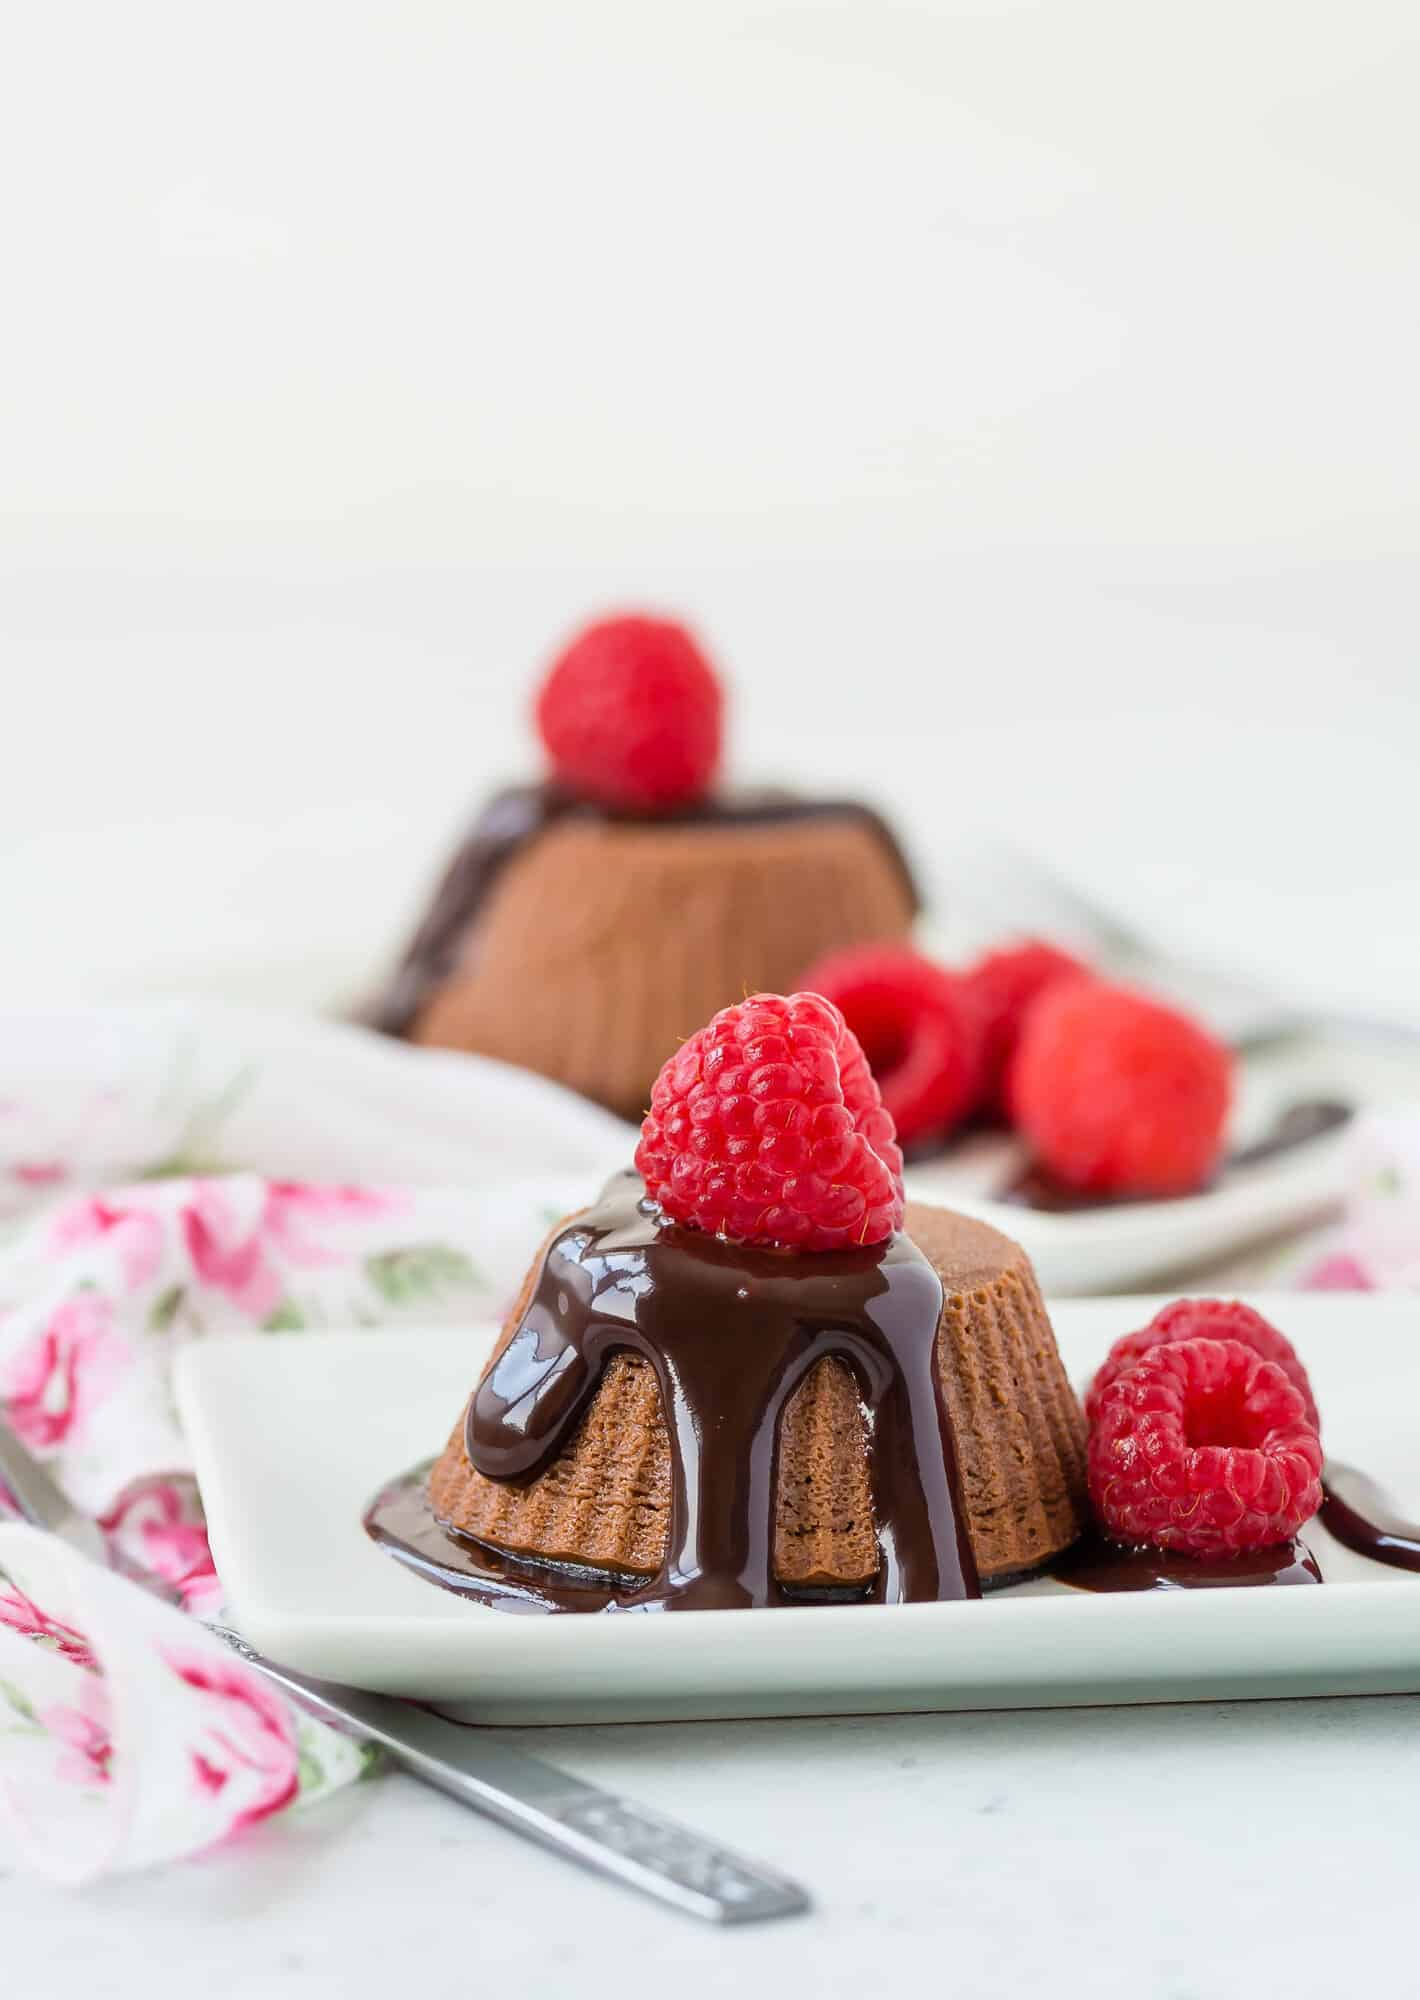 Healthy mini chocolate cheesecakes with chocolate sauce and raspberries.